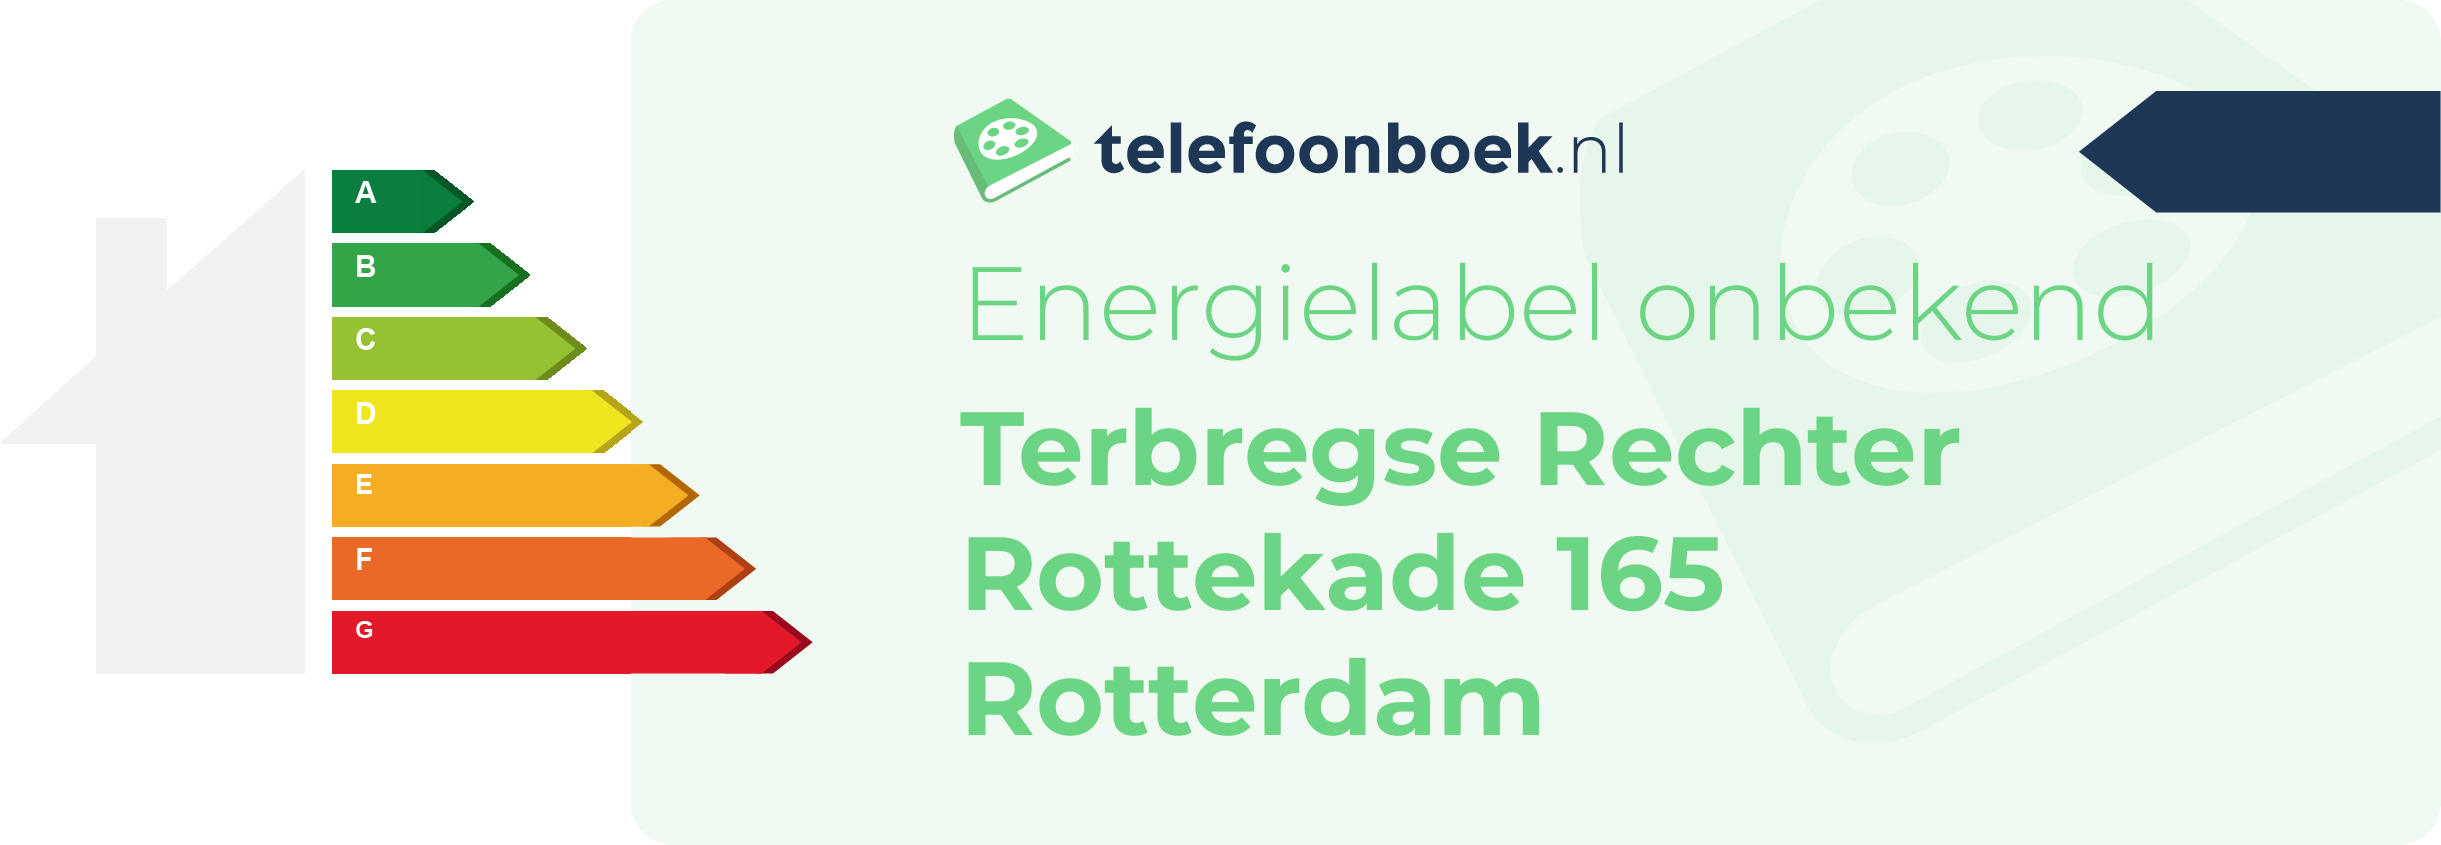 Energielabel Terbregse Rechter Rottekade 165 Rotterdam